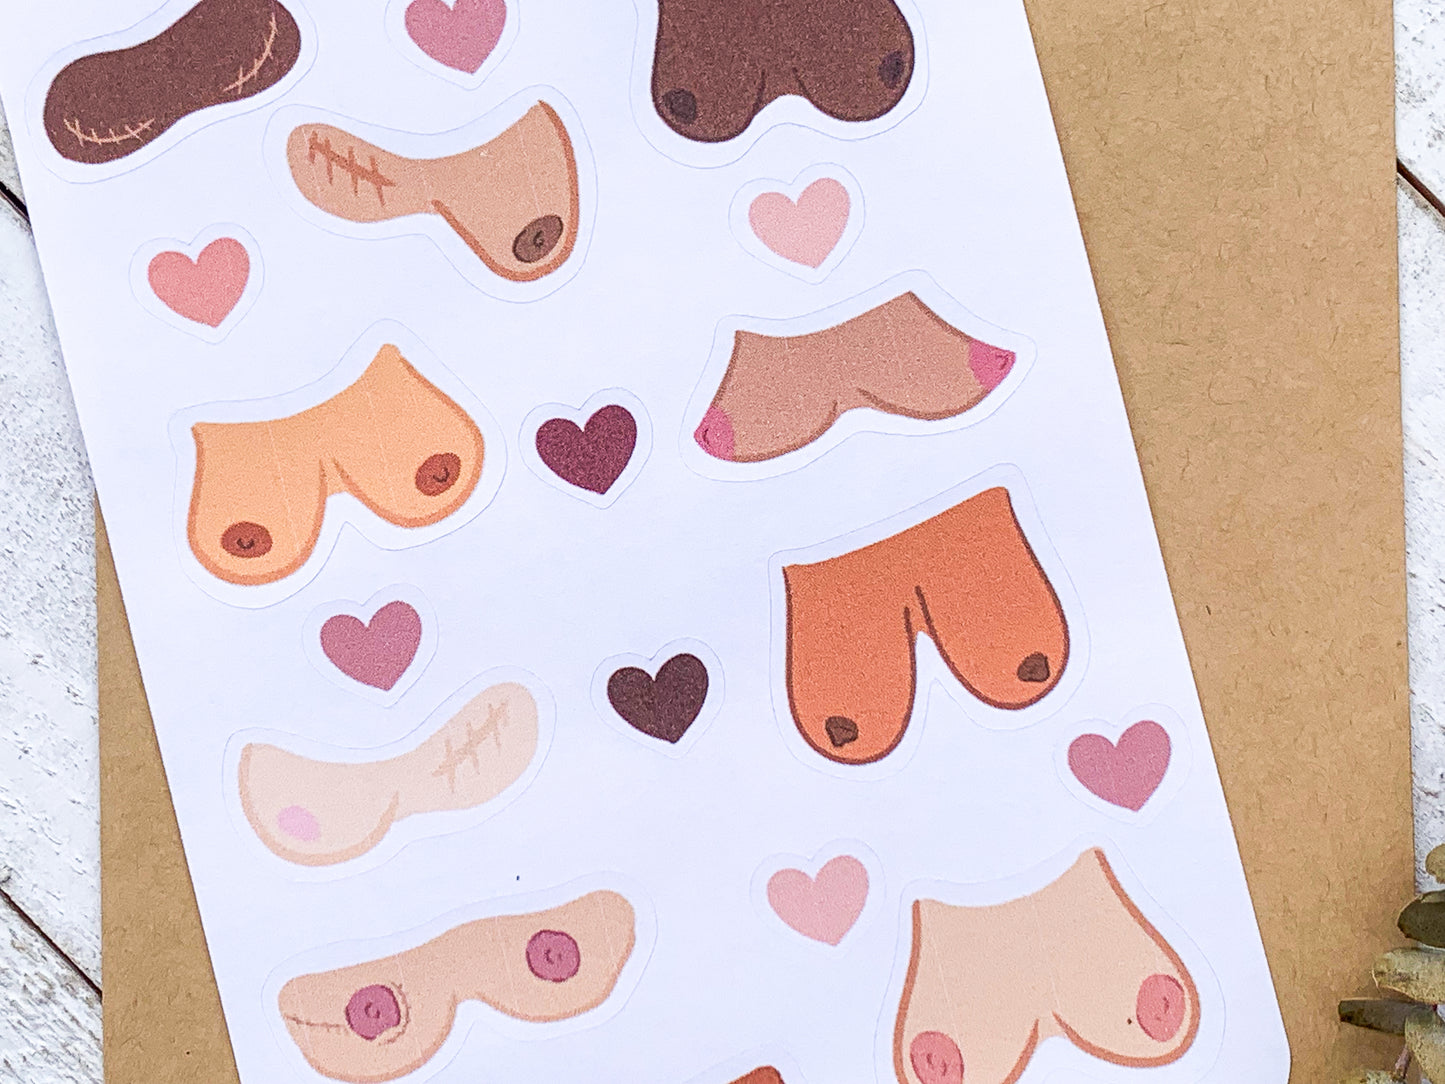 All Boobs Are Good Boobs Sticker Sheet